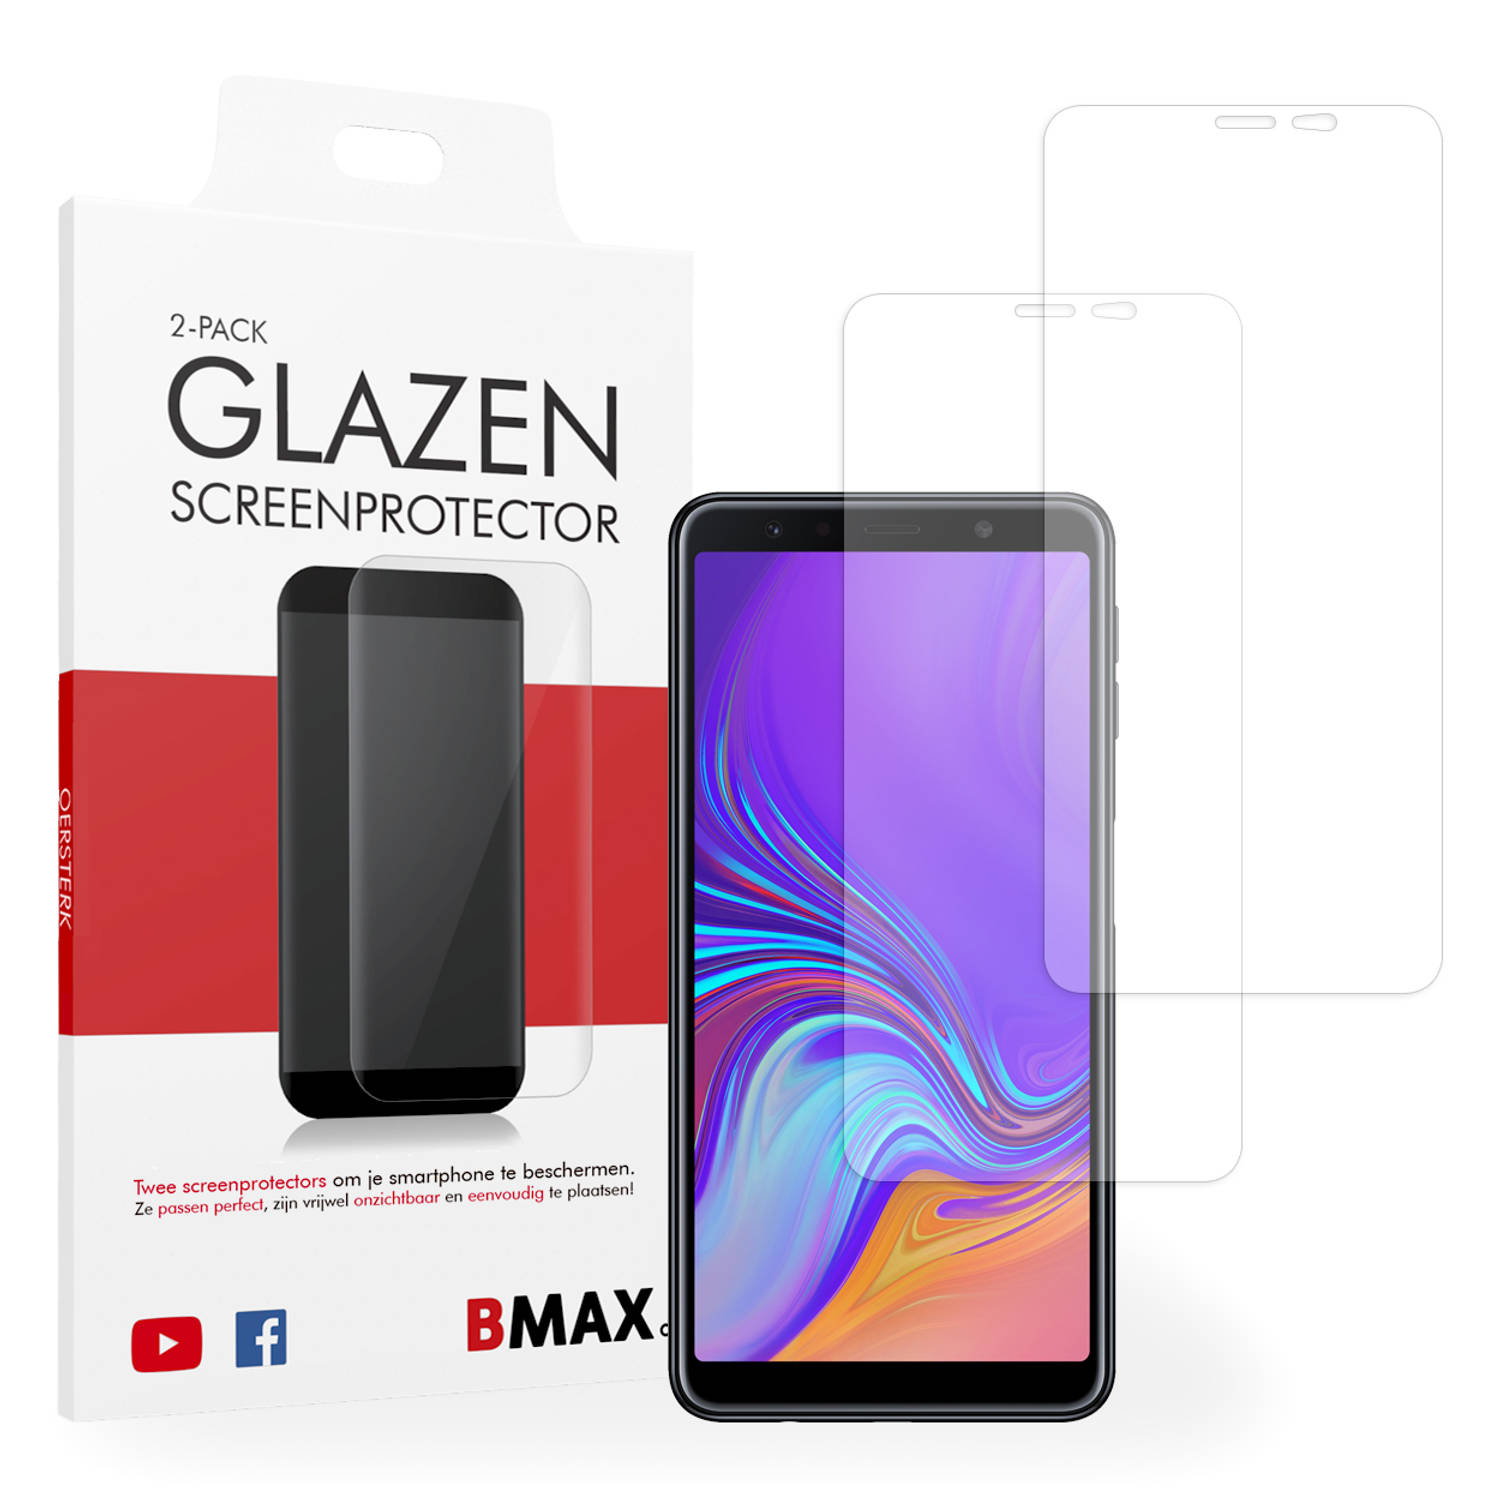 2-pack BMAX Samsung Galaxy A7 2018 Screenprotector - Glass - 2.5D